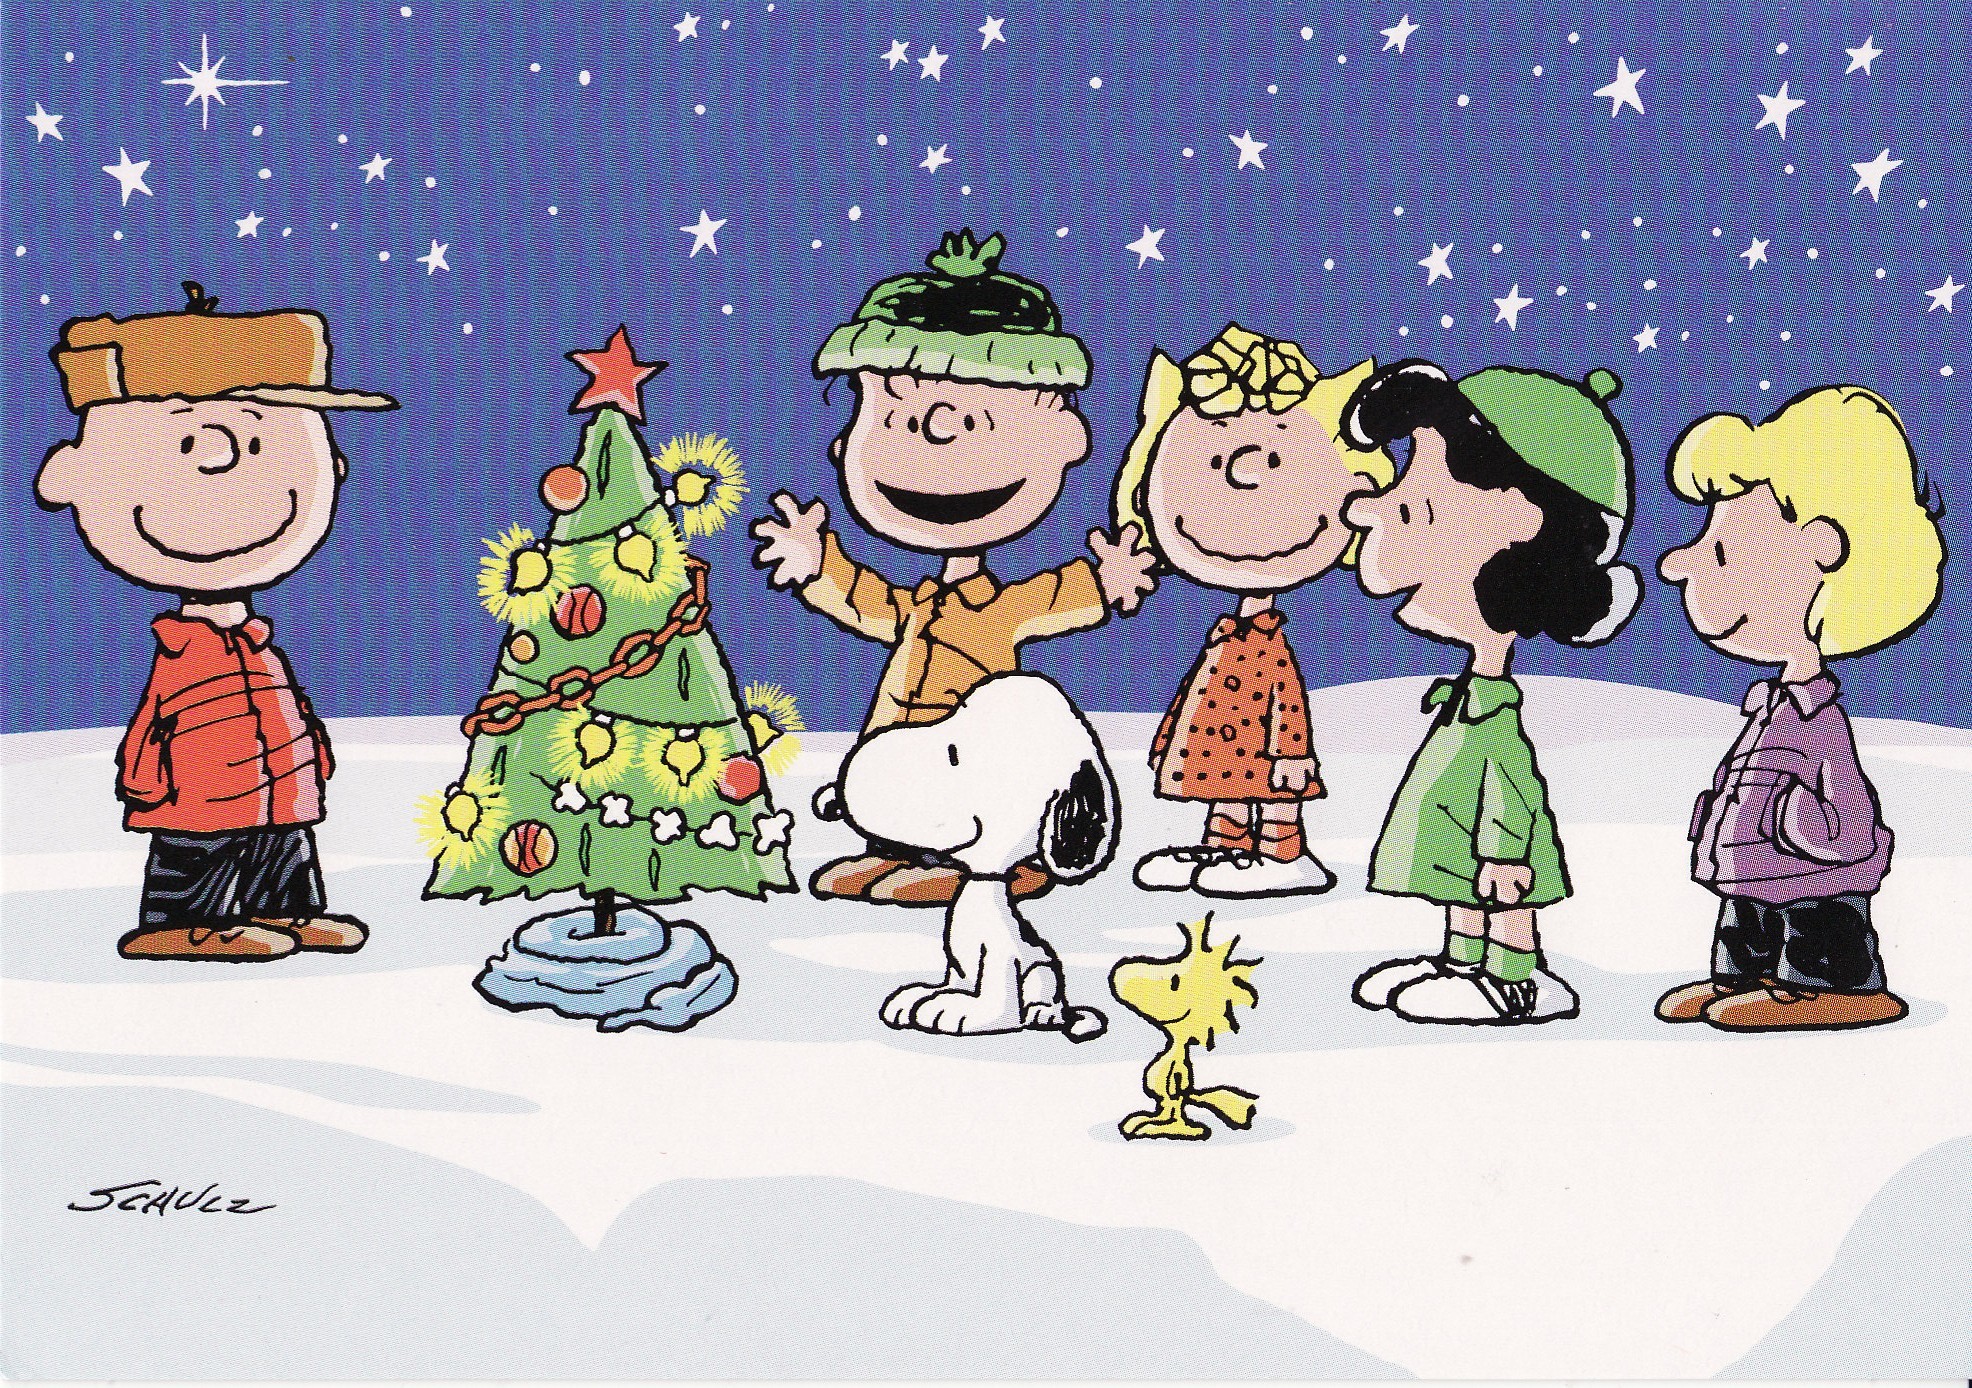 Charlie Brown Christmas Tree Wallpaper.